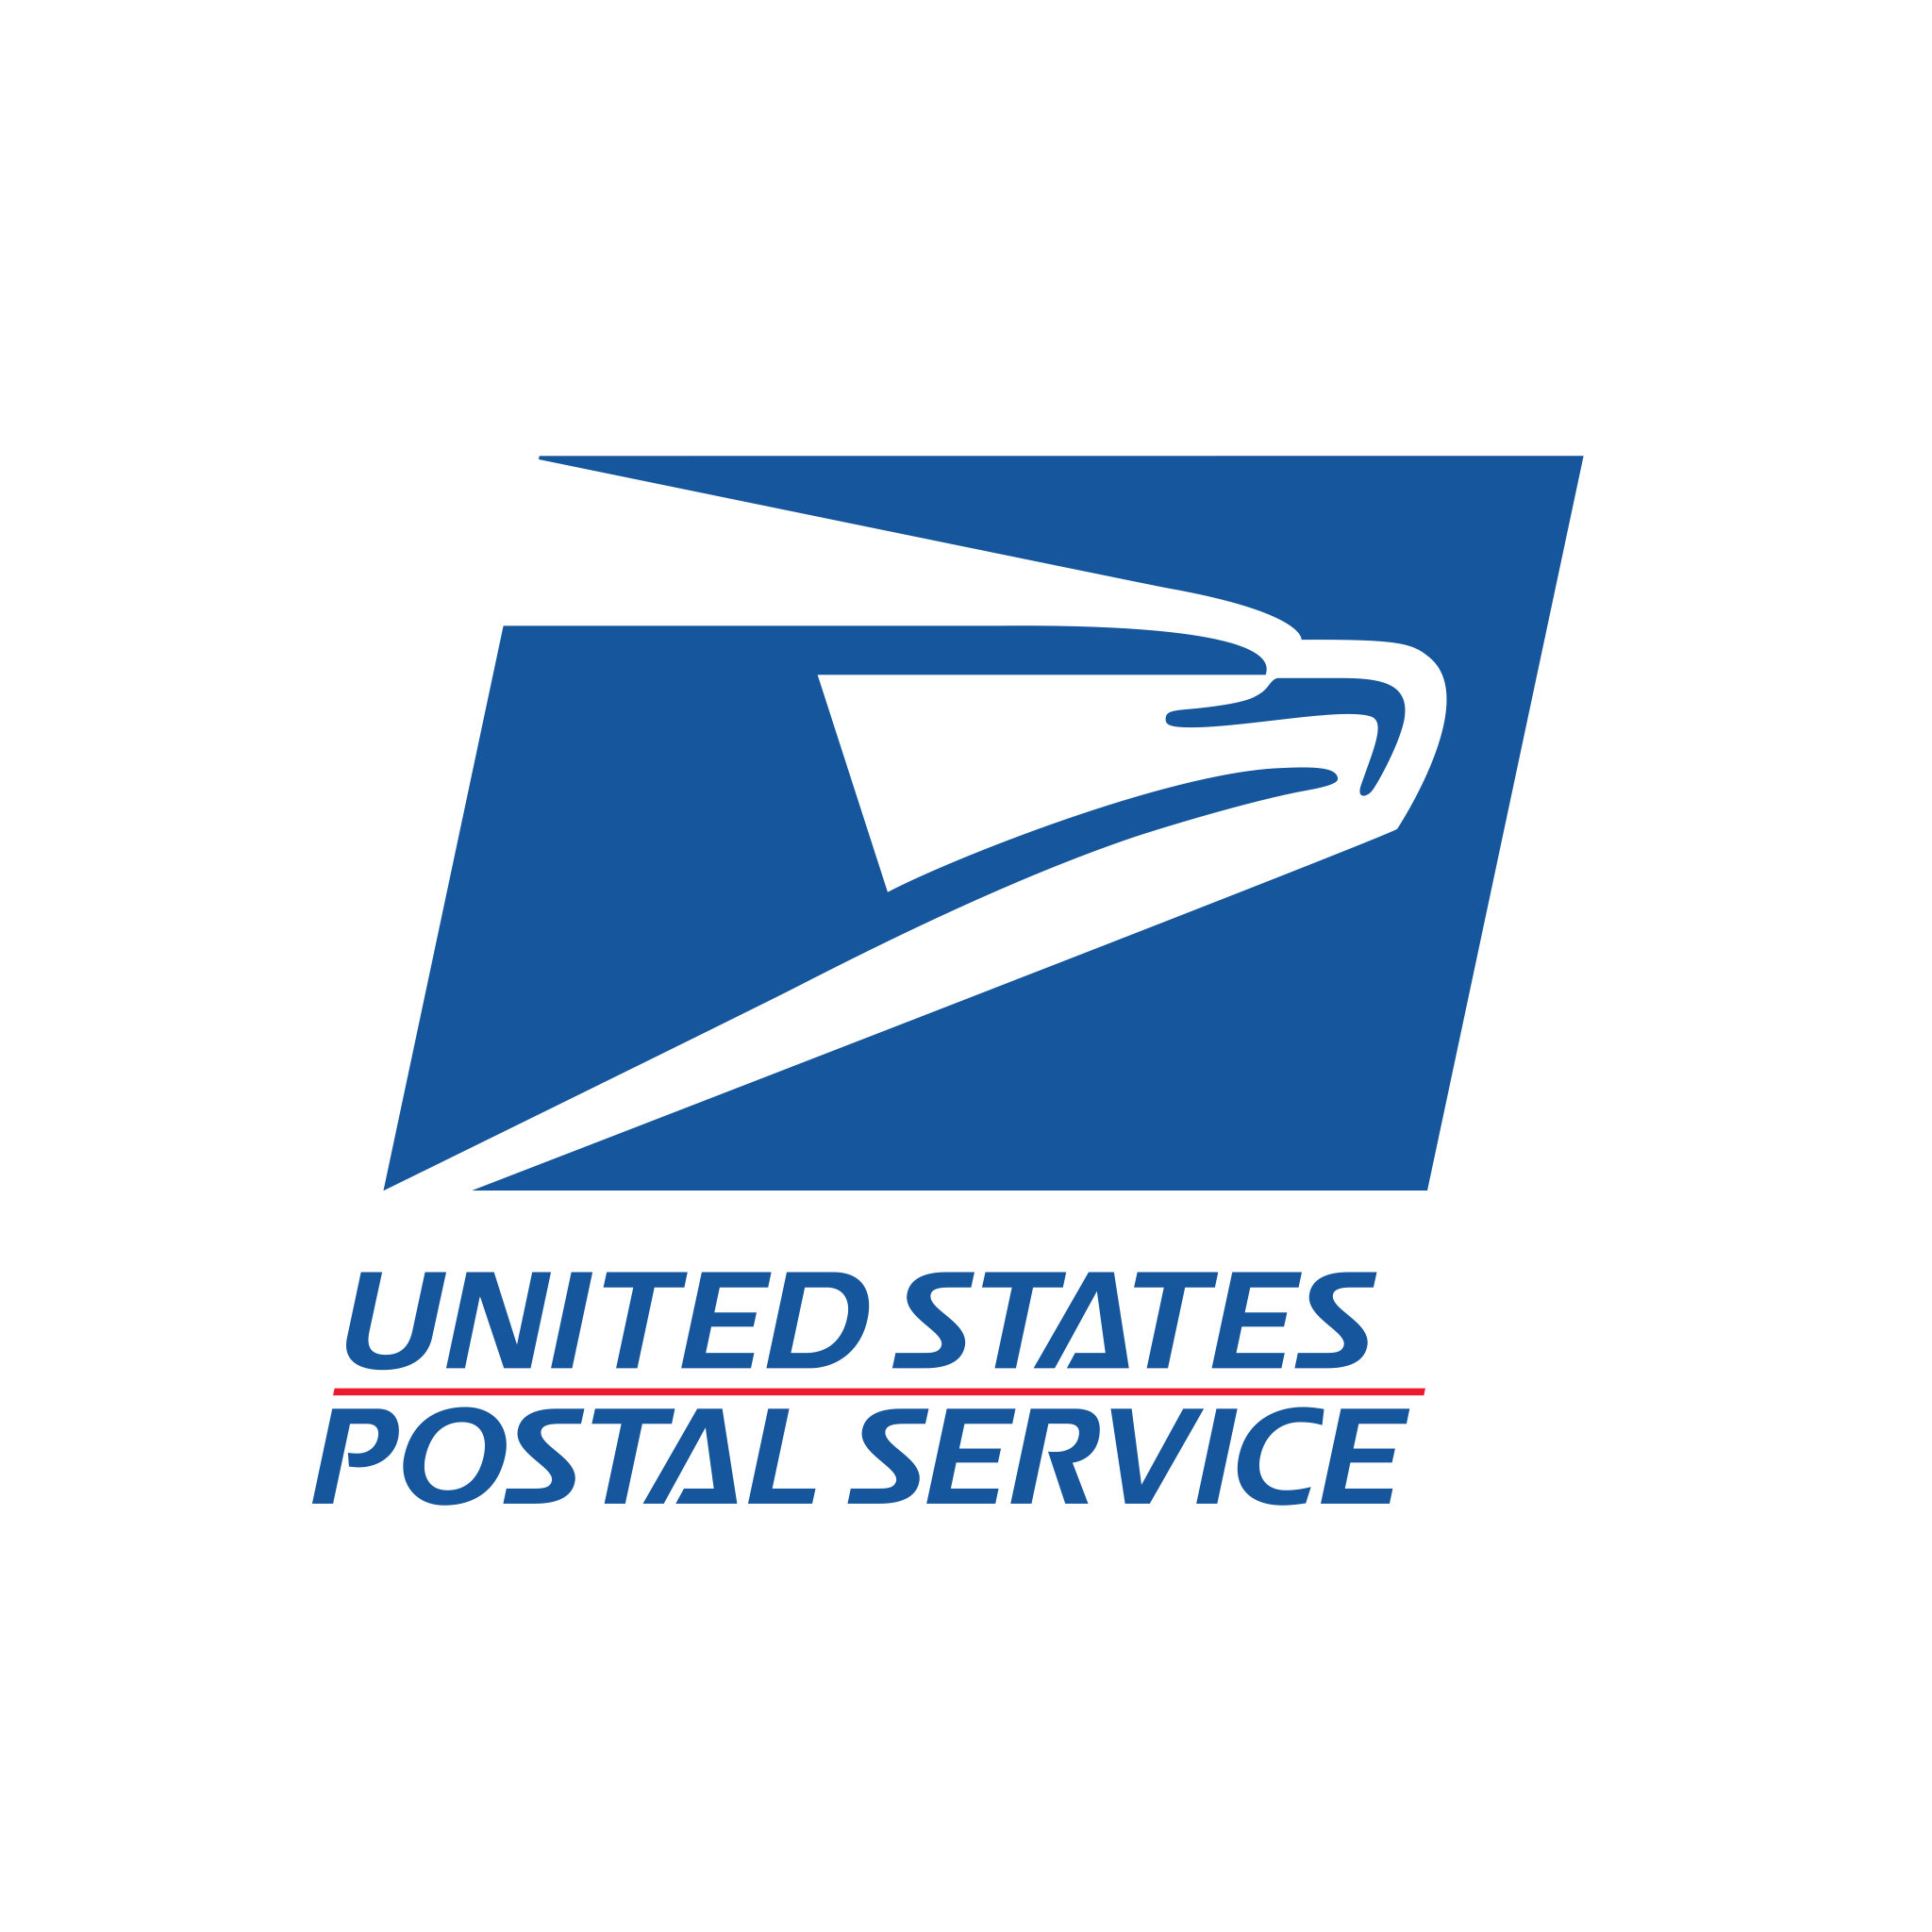 Top 93+ Images united states postal service everett photos Full HD, 2k, 4k